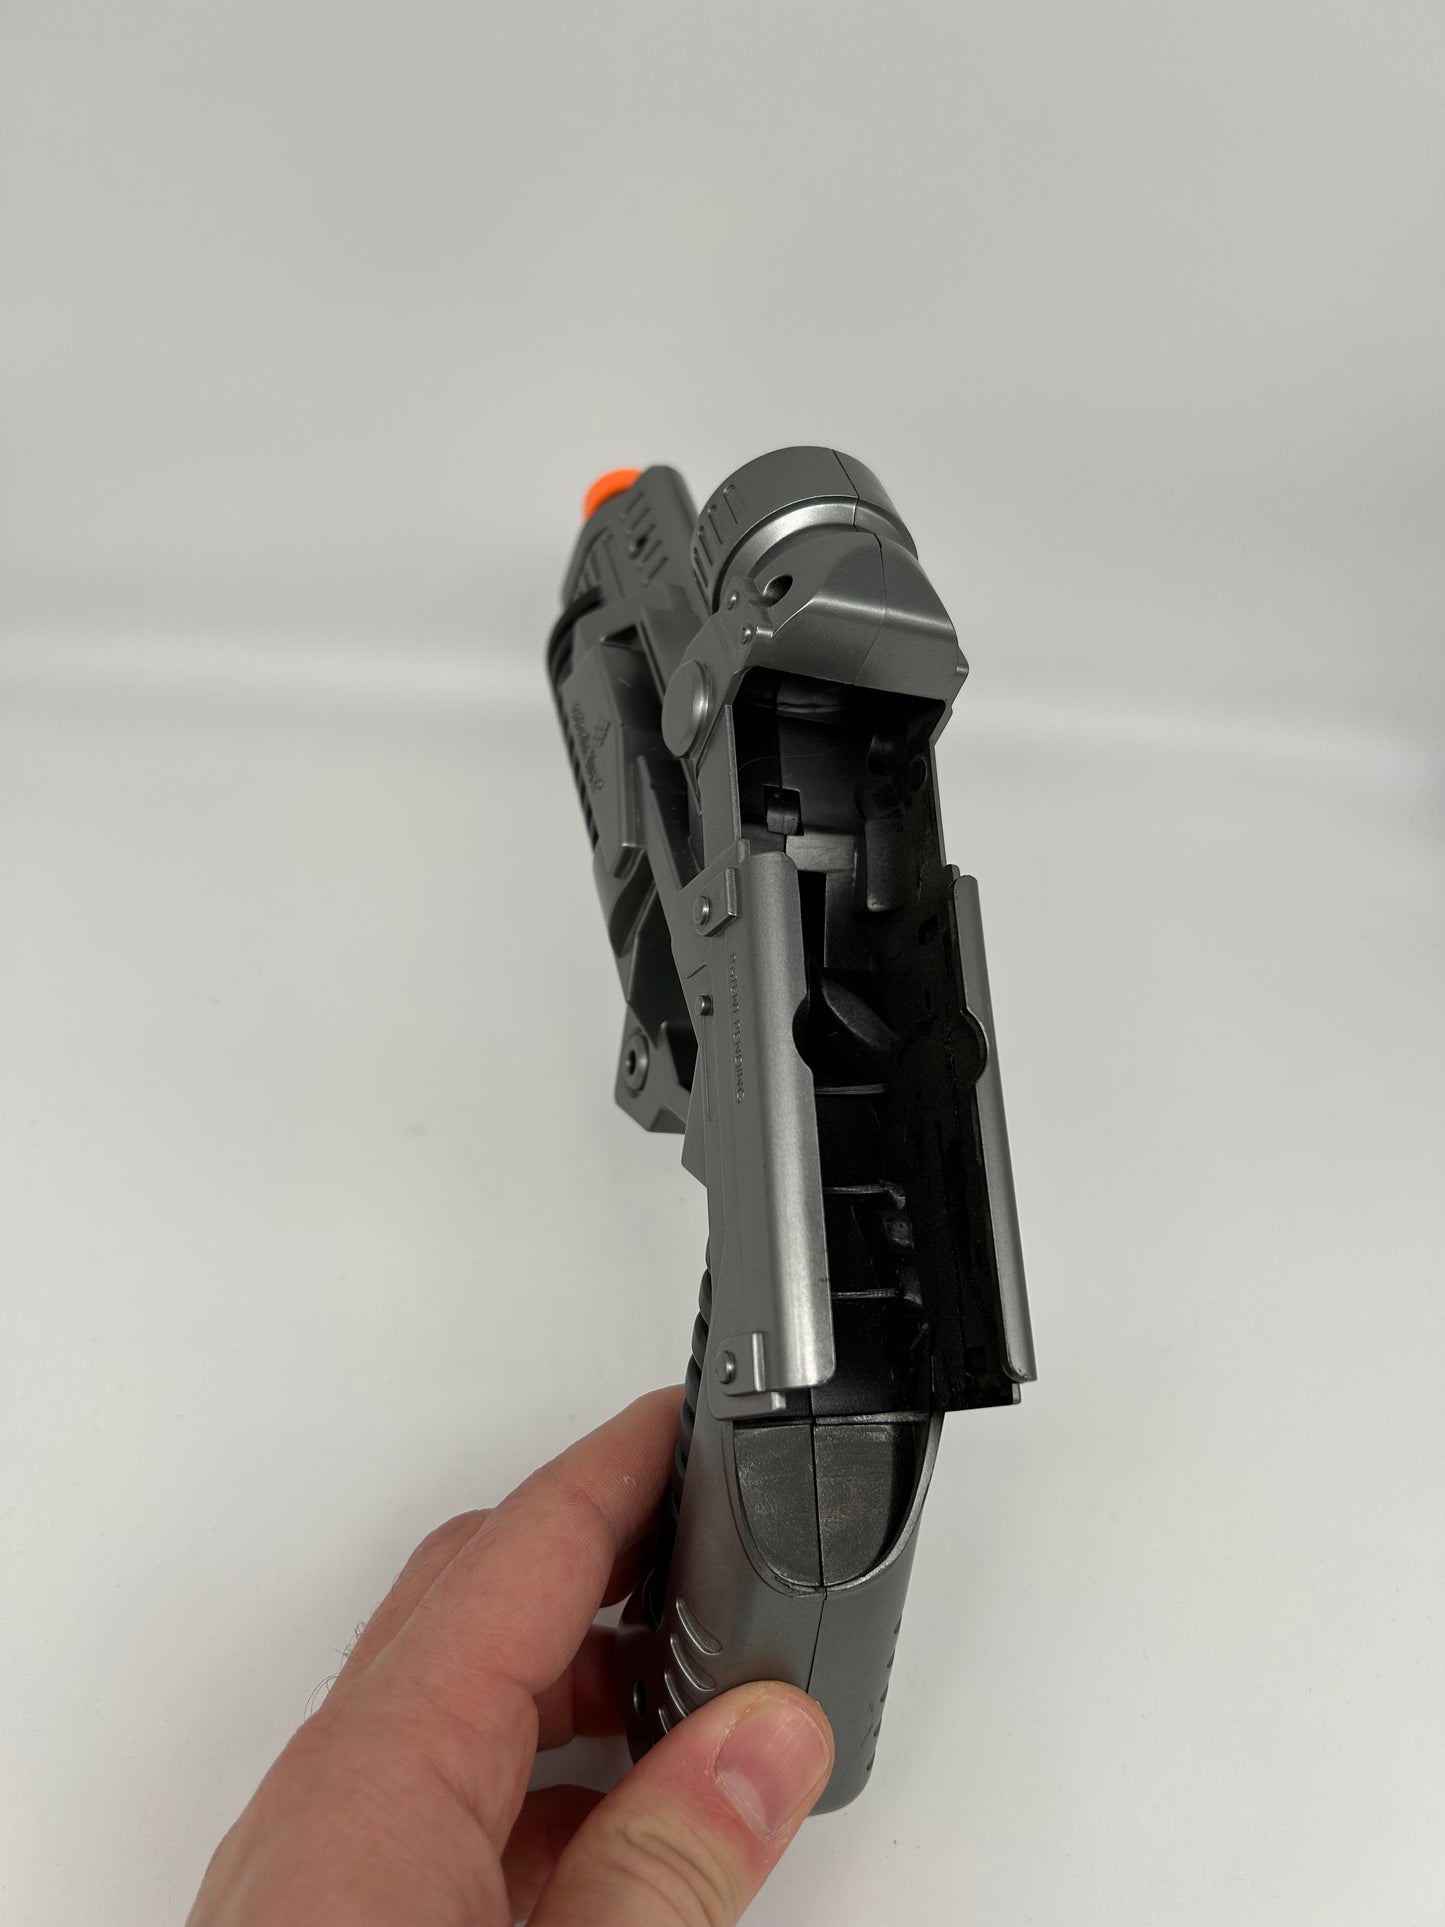 NiNTENDO Wii | FUSiL LiGHT GUN ZAPPER COBALT FLUX DARK OPS LOCKN LOAD